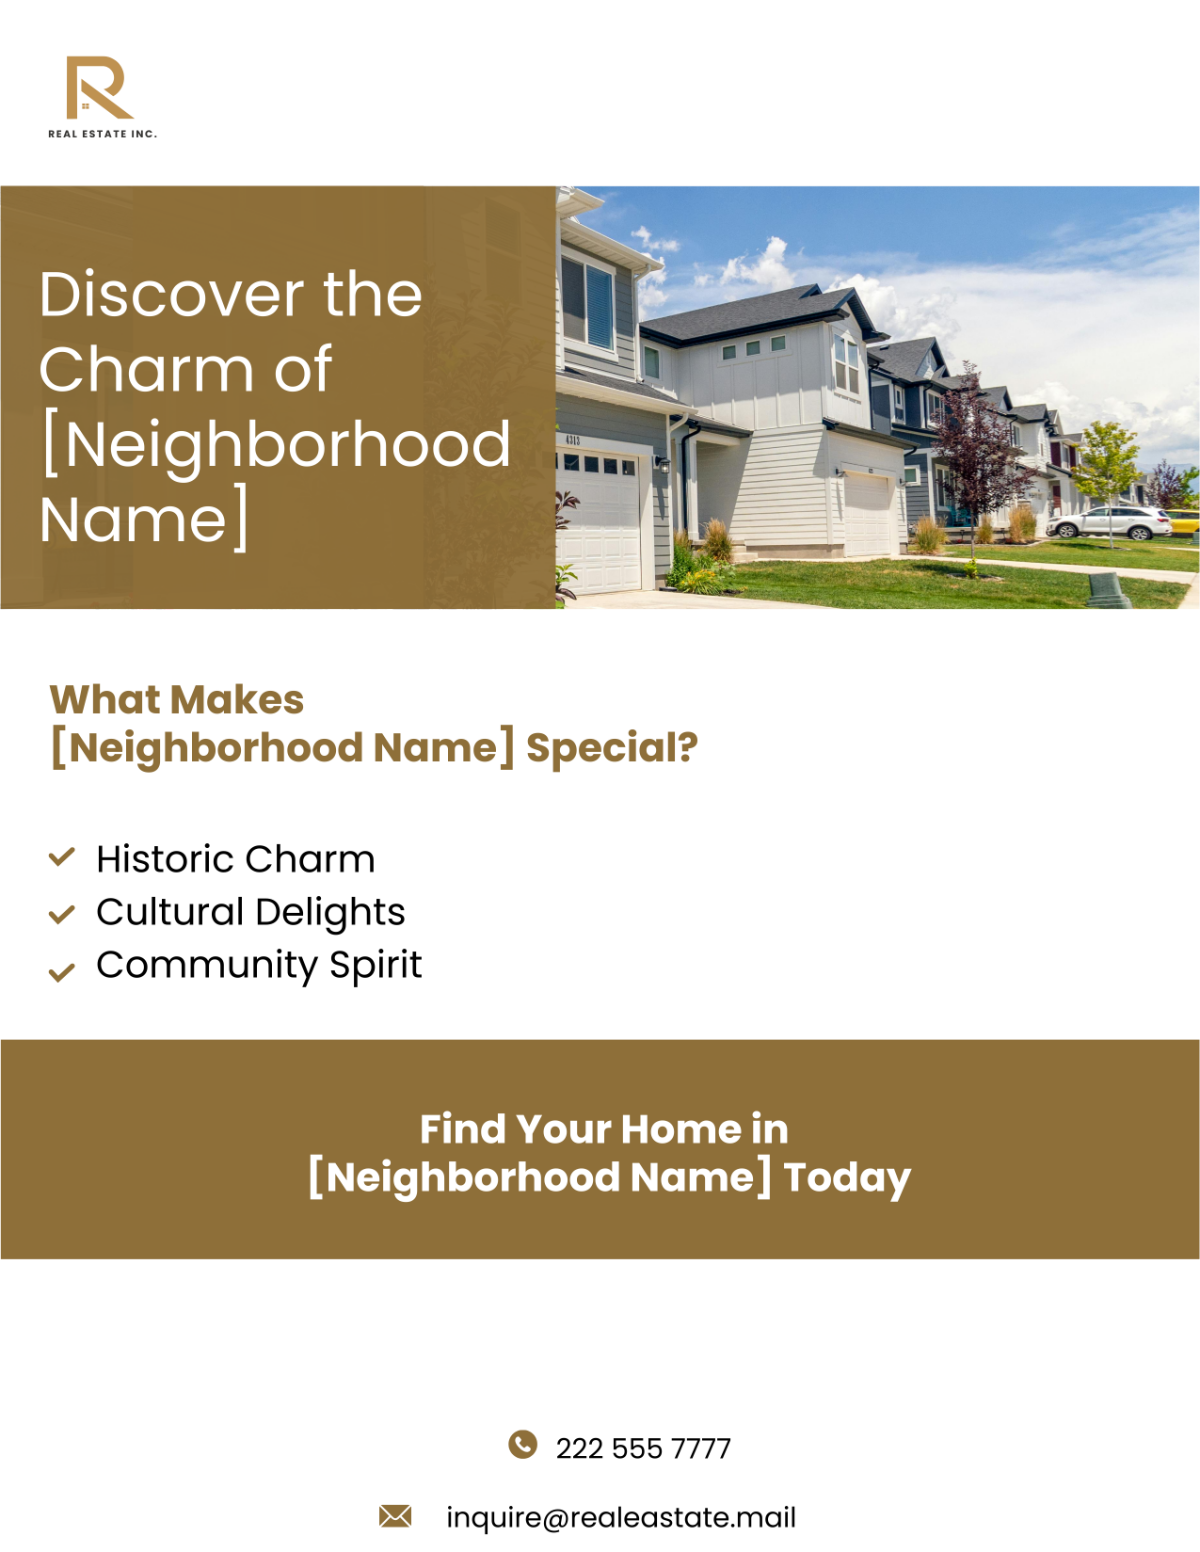 Neighborhood Spotlight Flyer Template